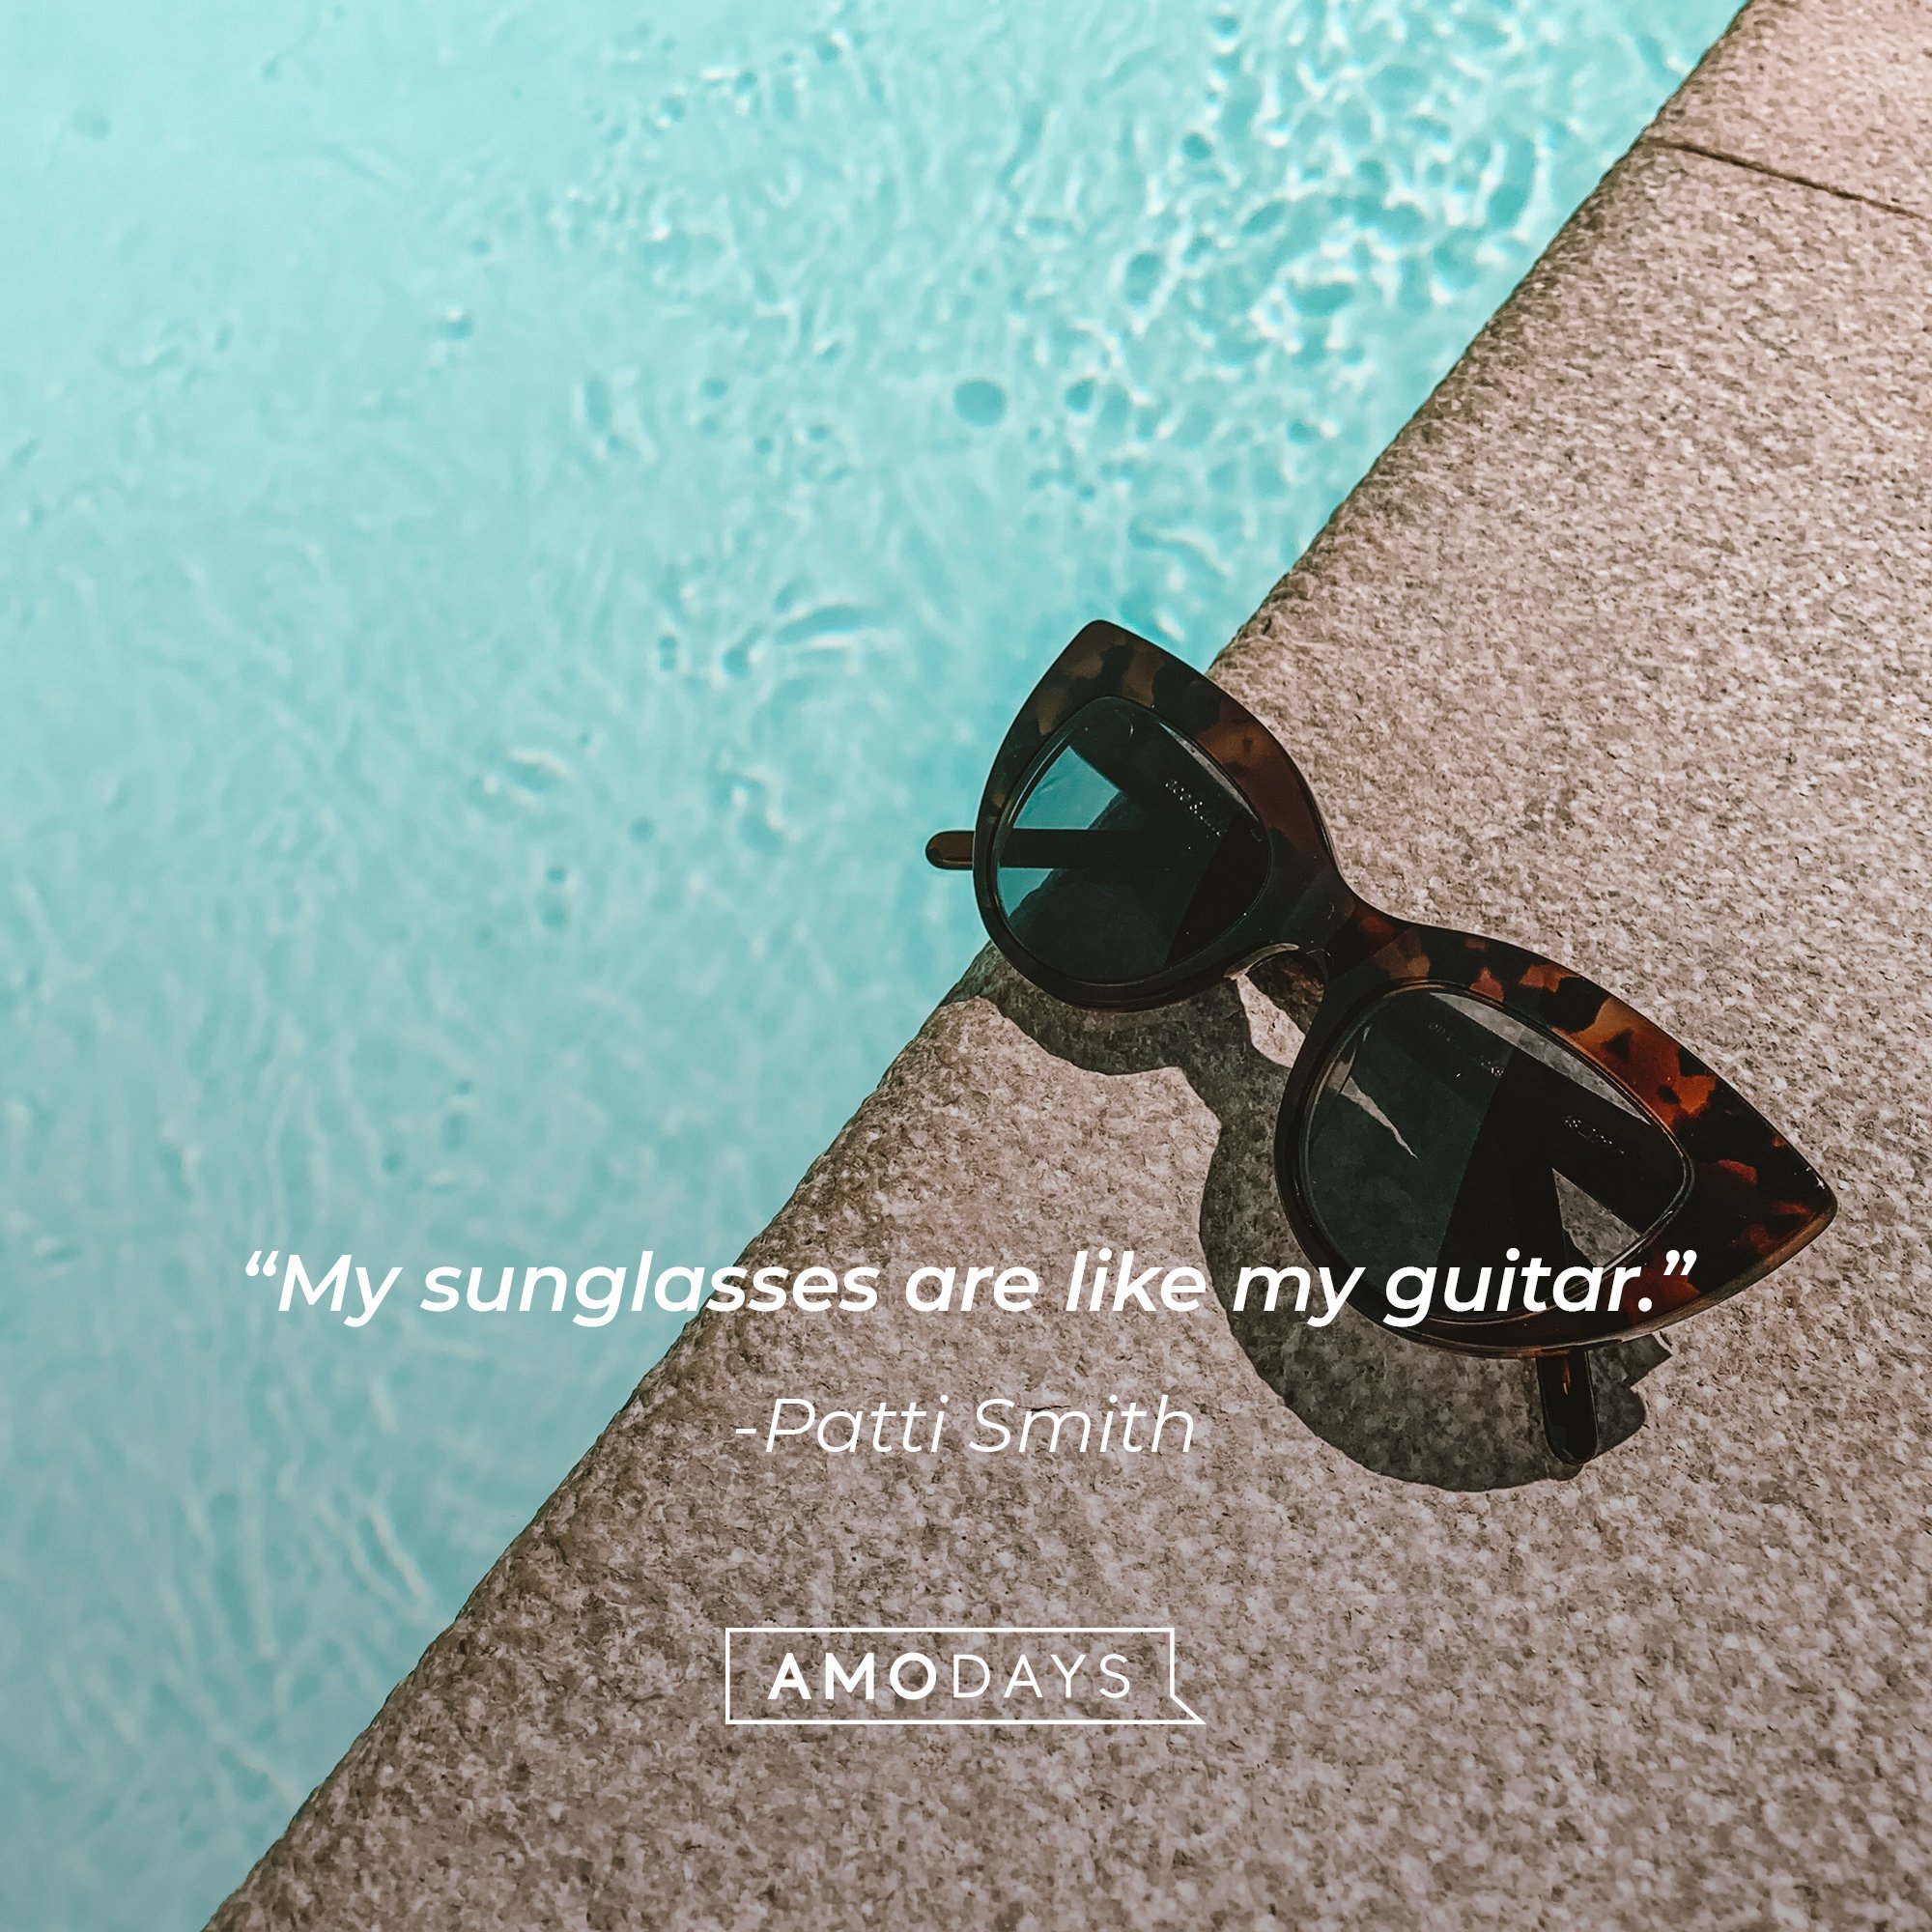 Patti Smith’s quote: "My sunglasses are like my guitar." | Image: AmoDays